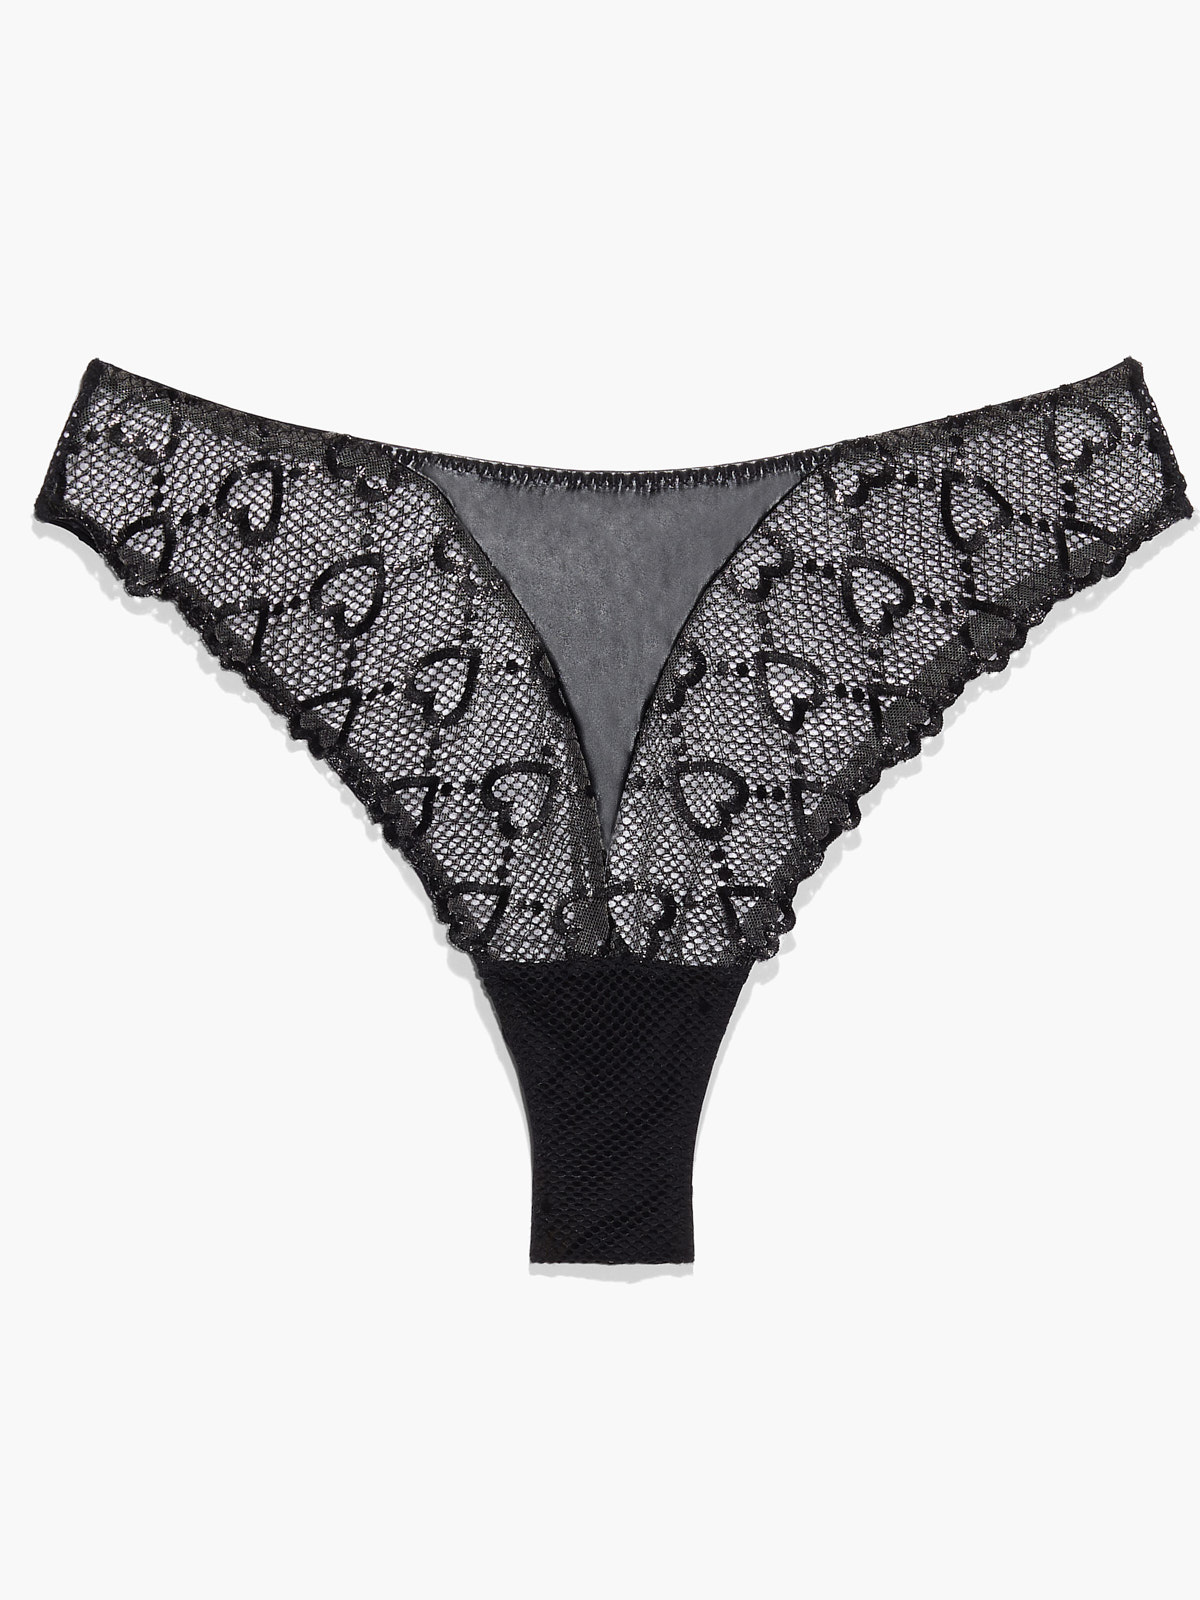 FLO-DENTAL BUQUE black lacy brazilian cut underwear